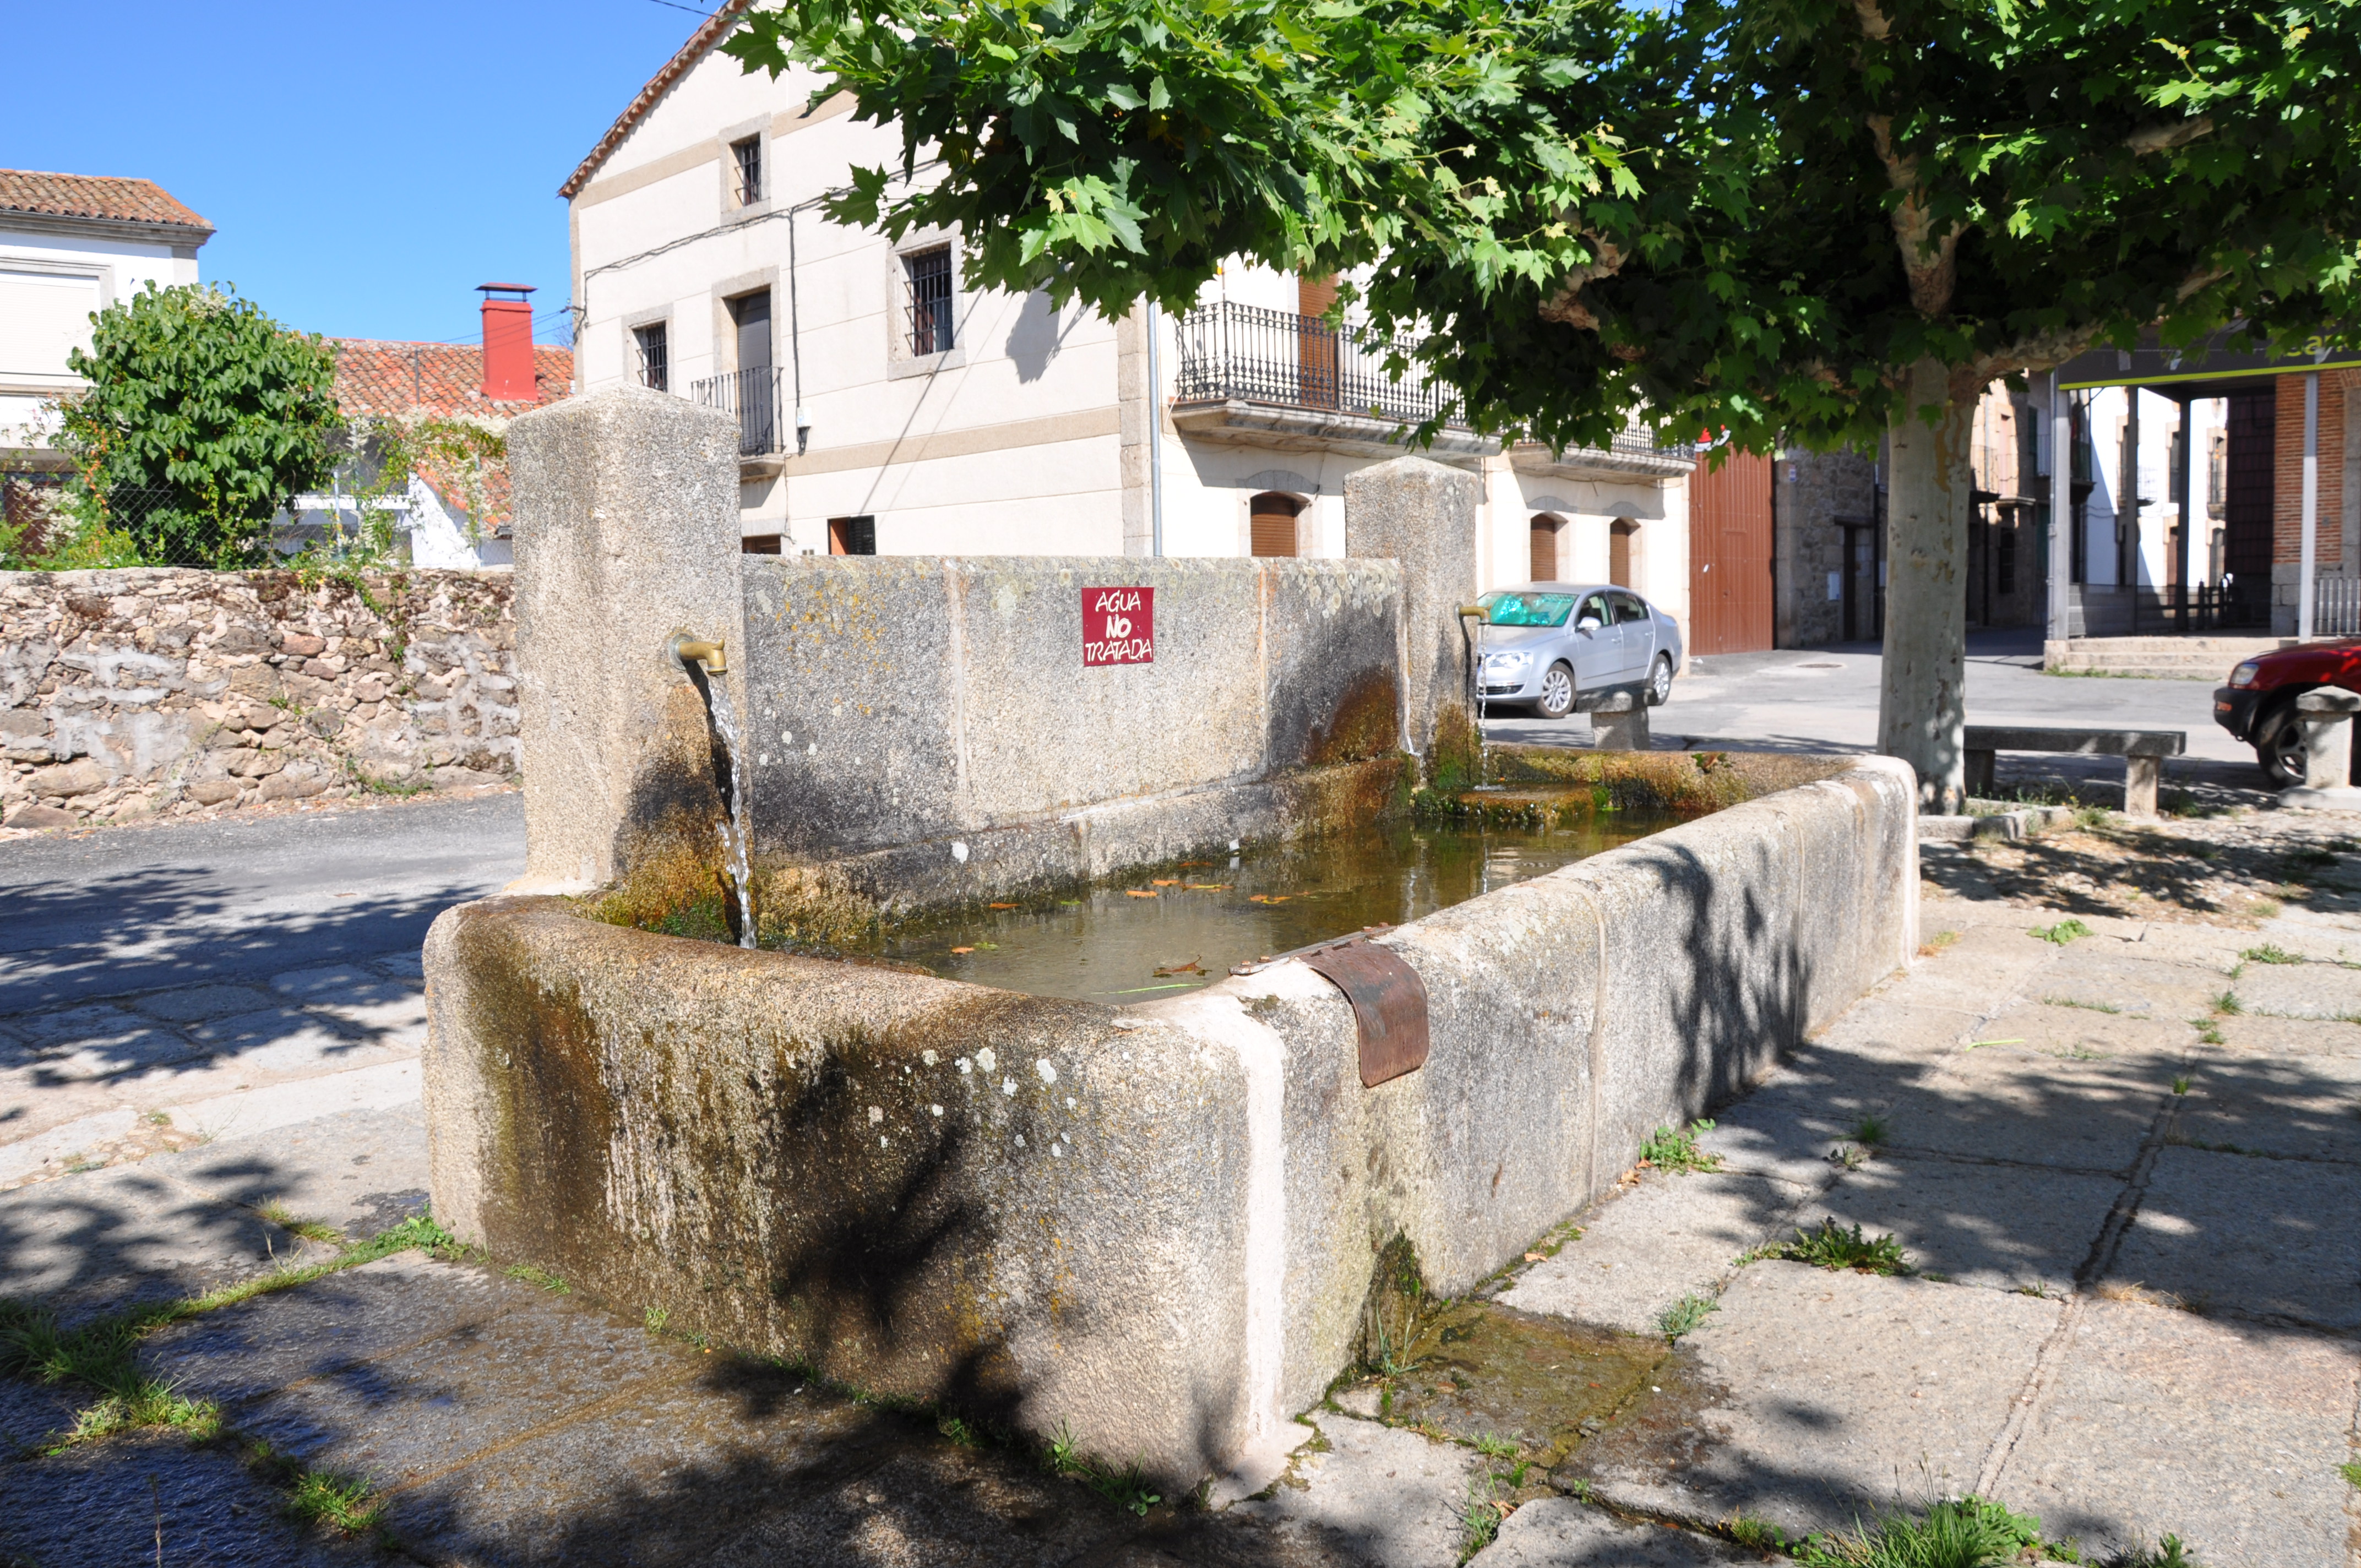 File:Sardas. Pila del lavadero.jpg - Wikimedia Commons